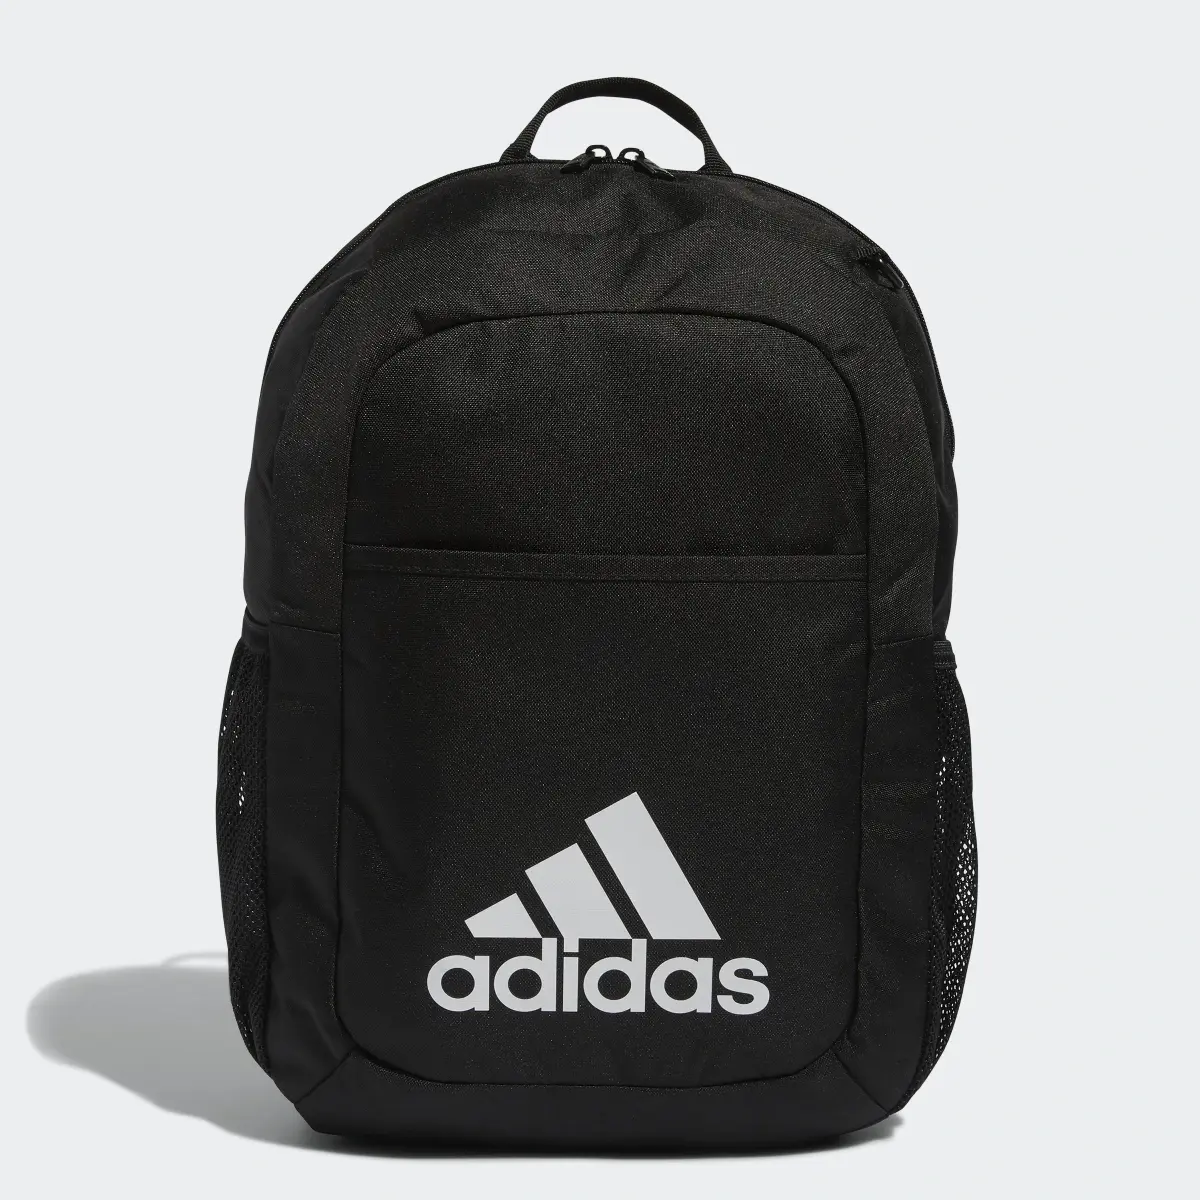 Adidas Ready Backpack. 1